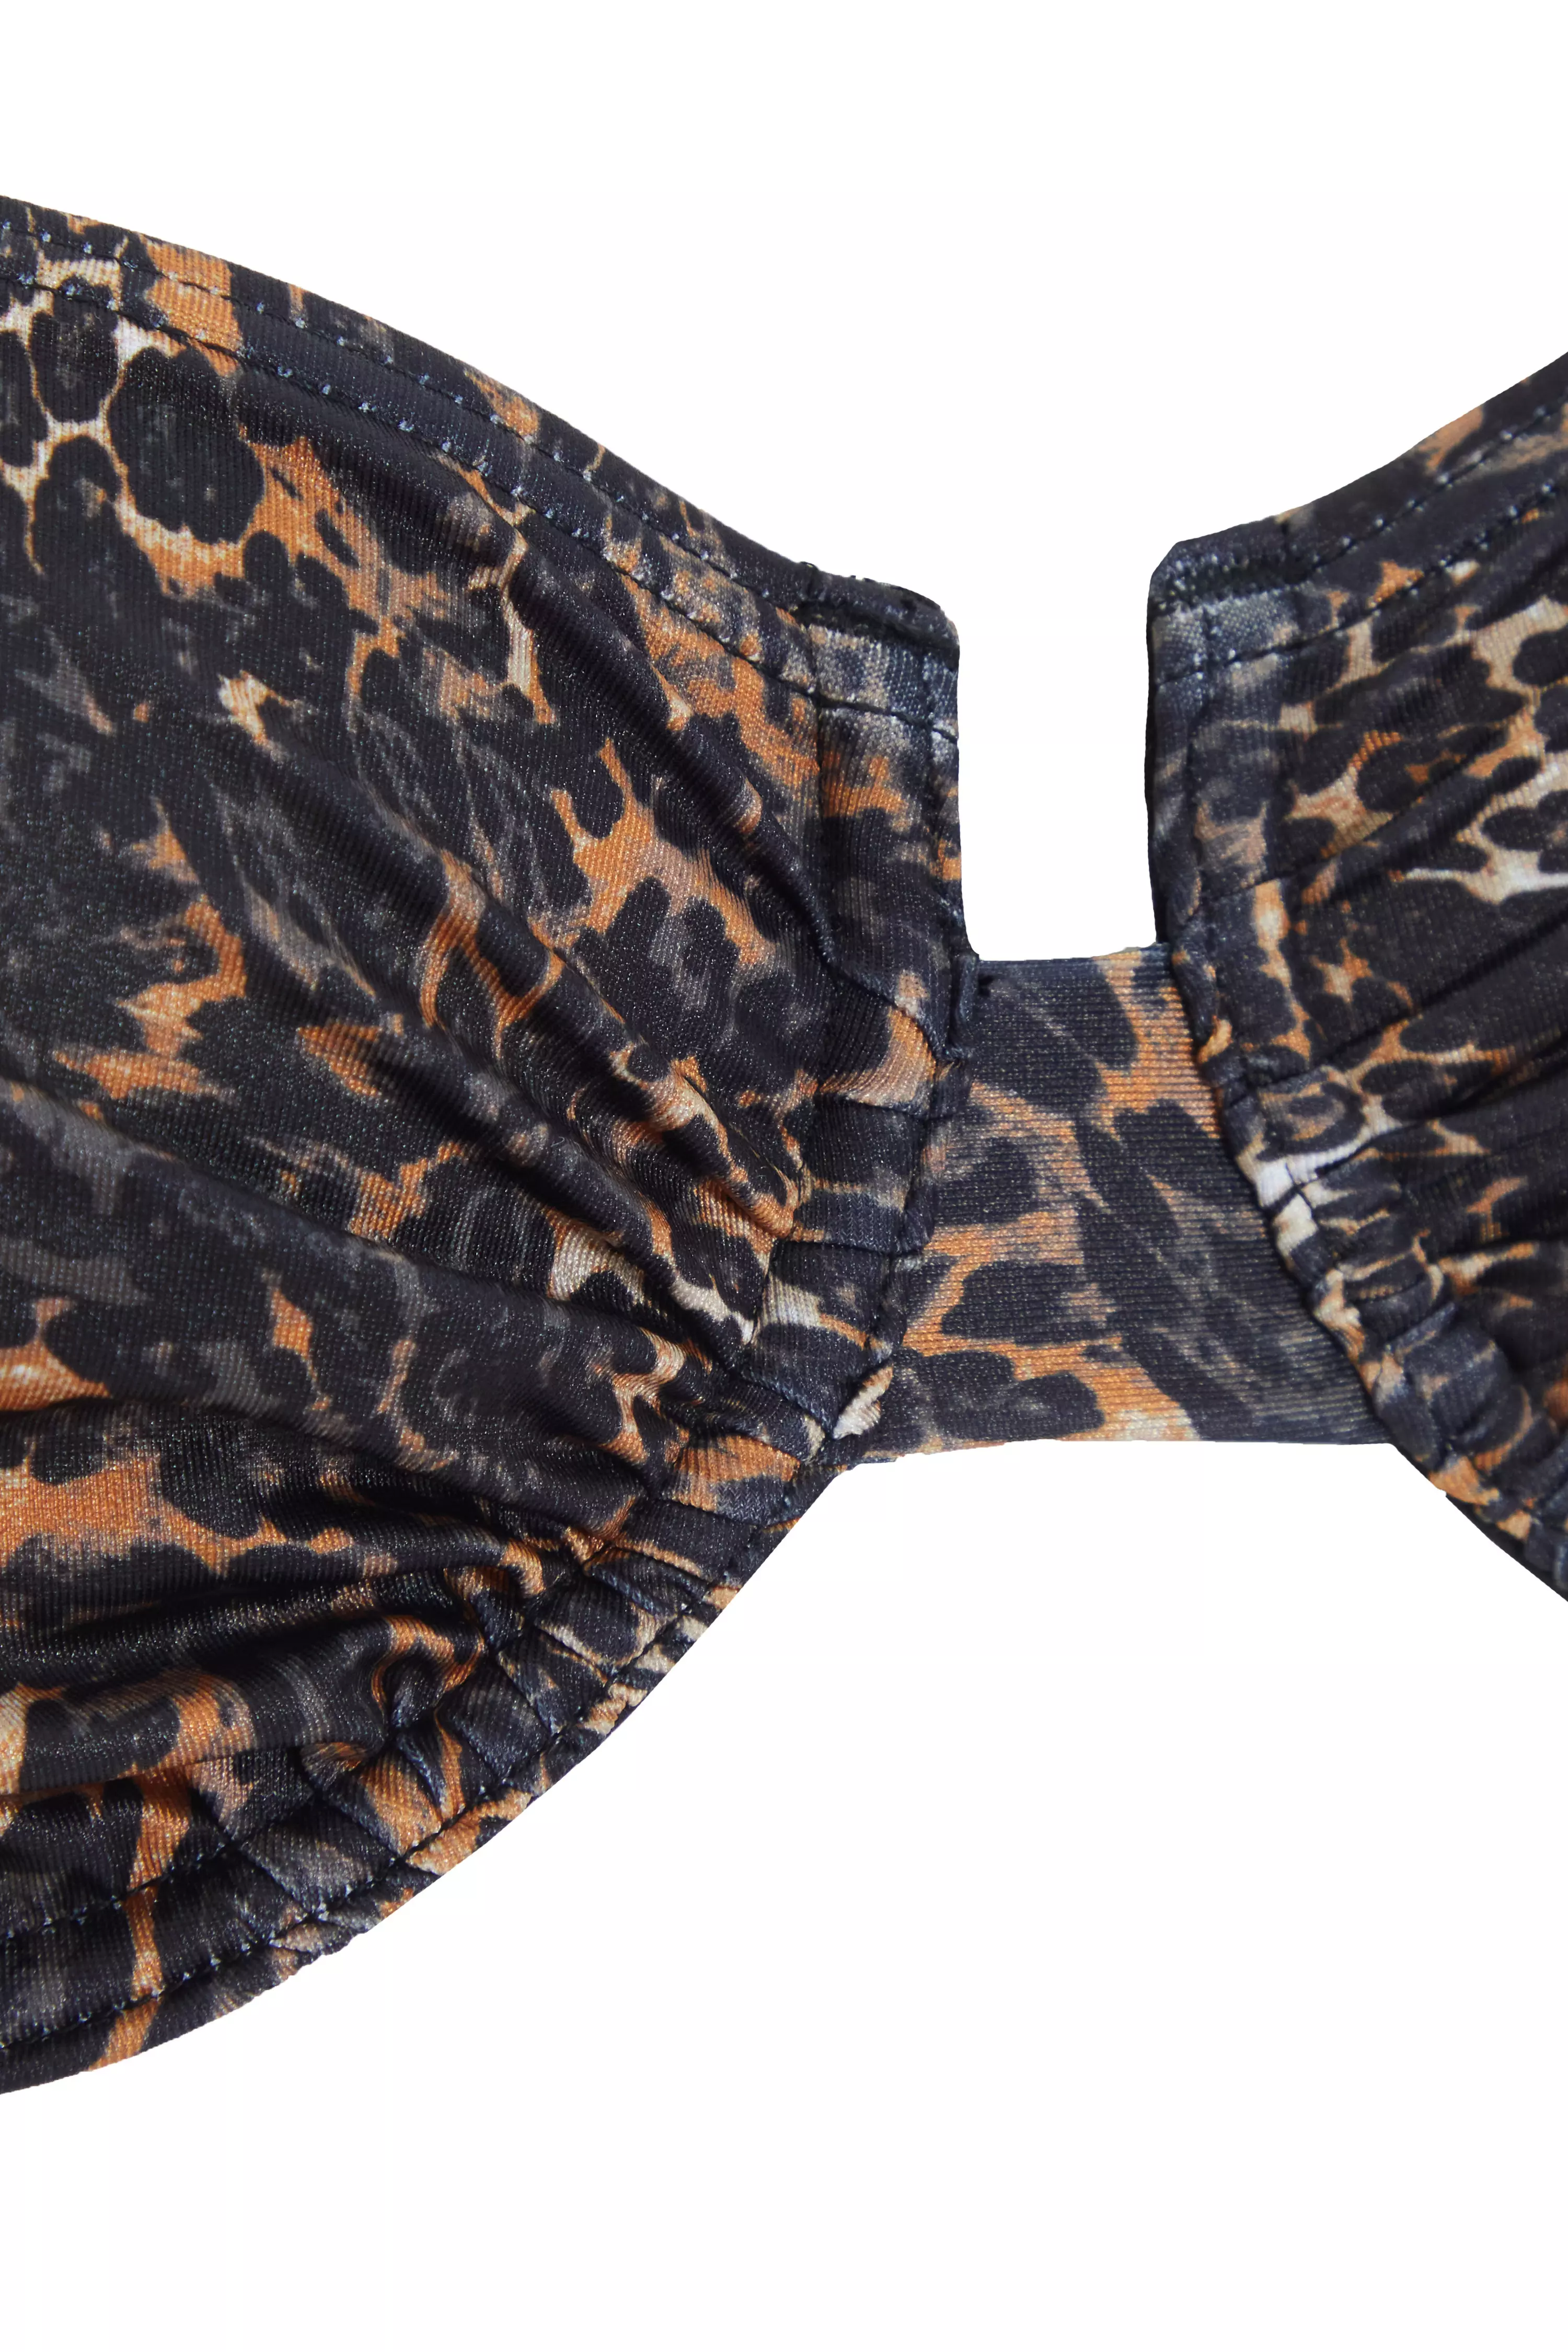 Brown Leopard Print Underwire Bikini Top